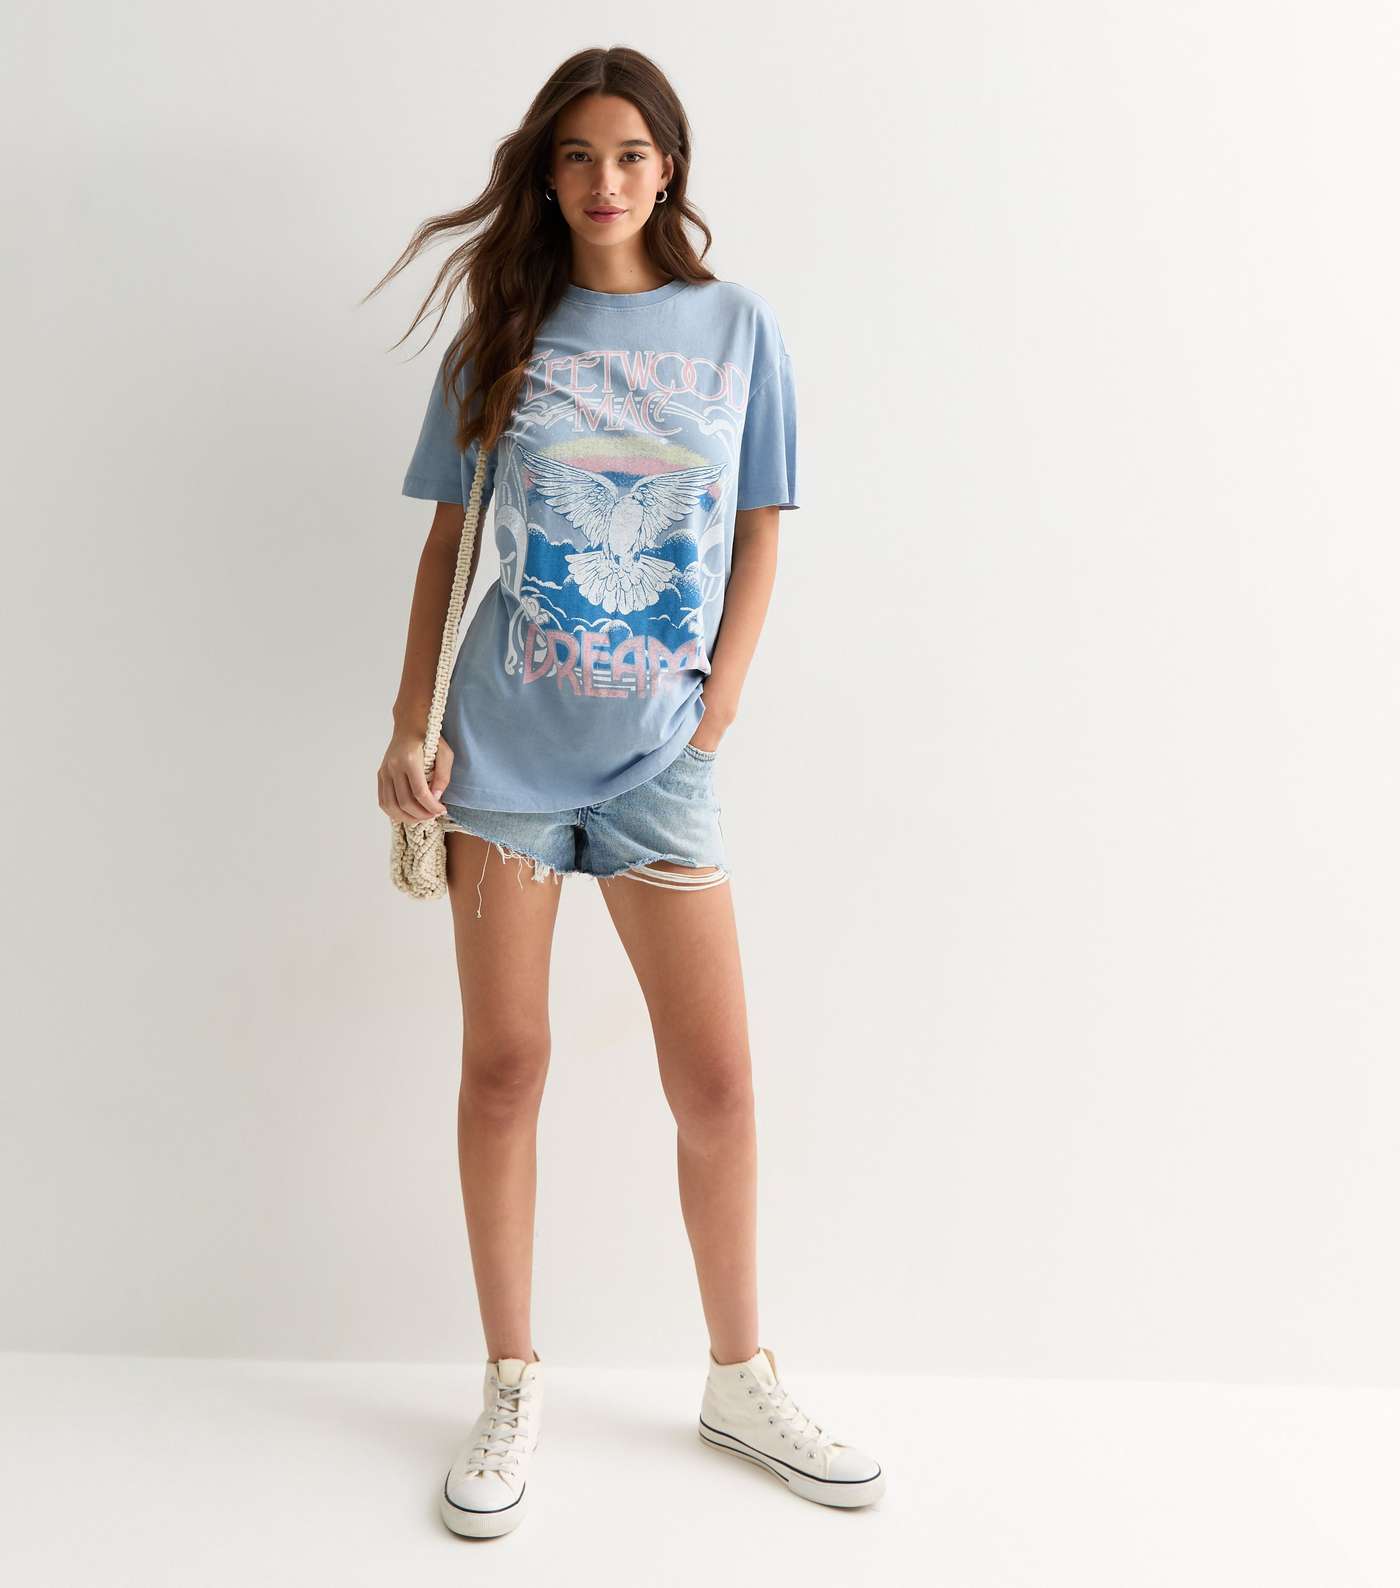 Blue Fleetwood Mac Oversized Cotton T-Shirt  Image 3